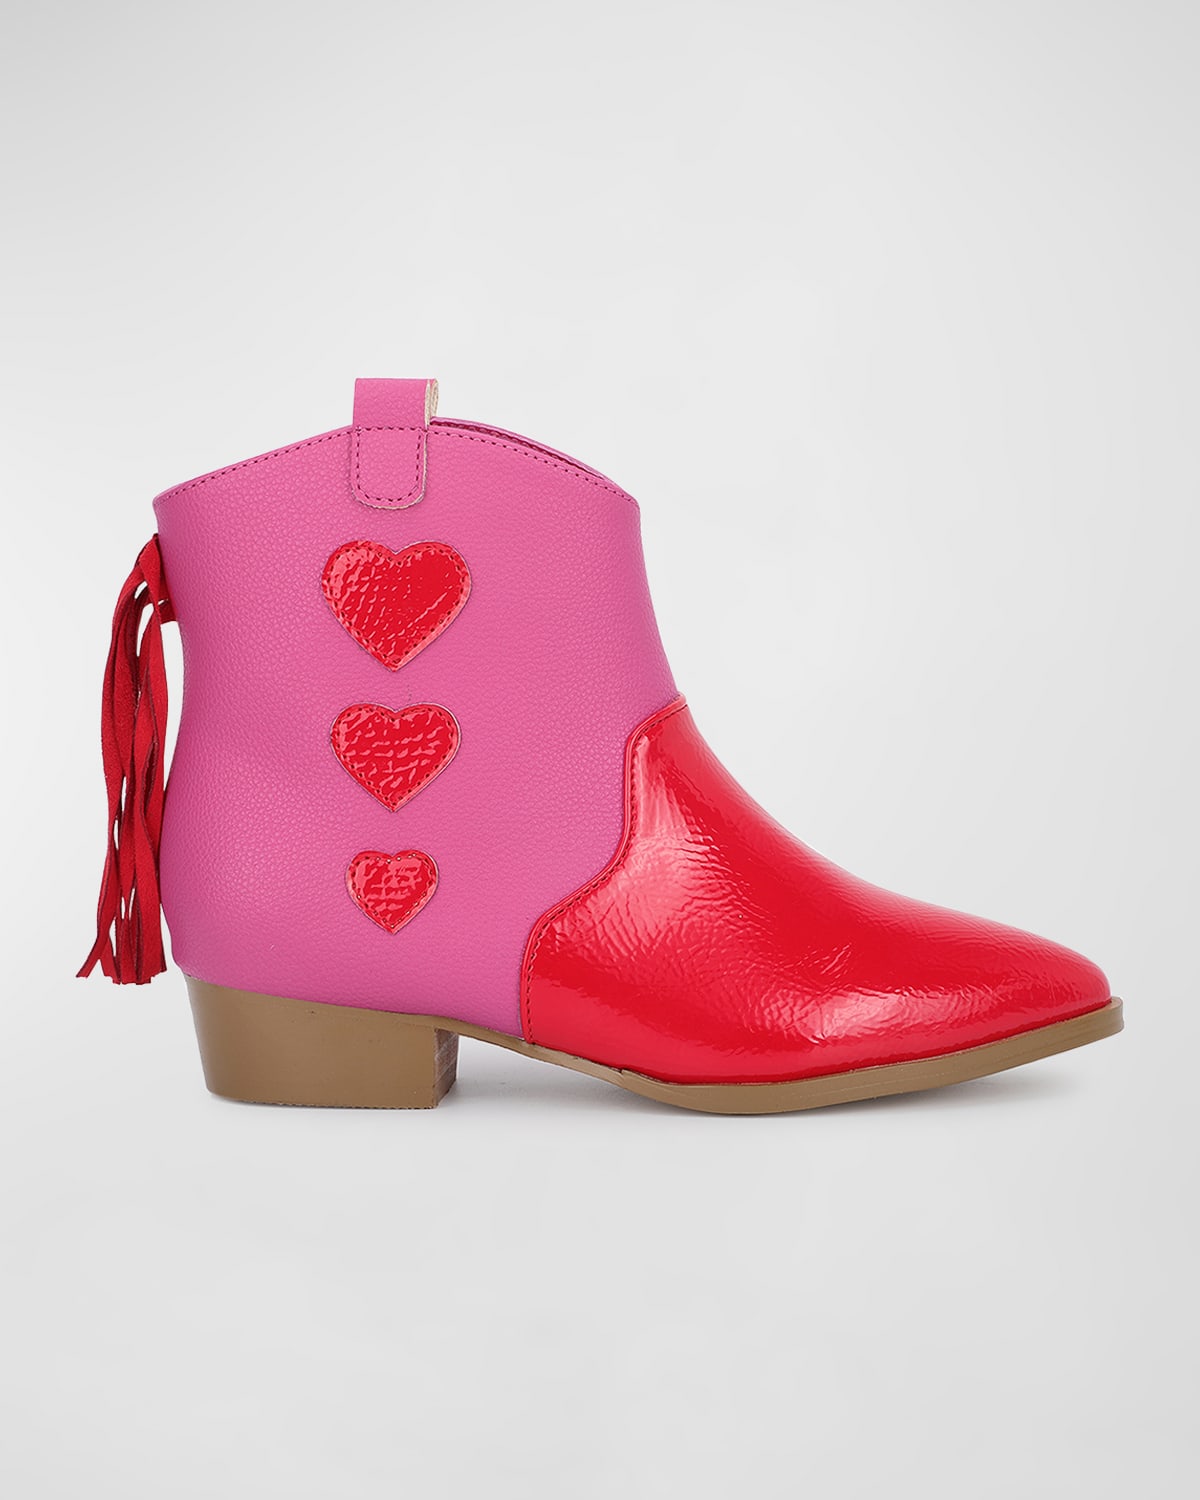 Yosi Samra Girl's Miss Dallas Heart Cowboy Boots, Toddler/Kids